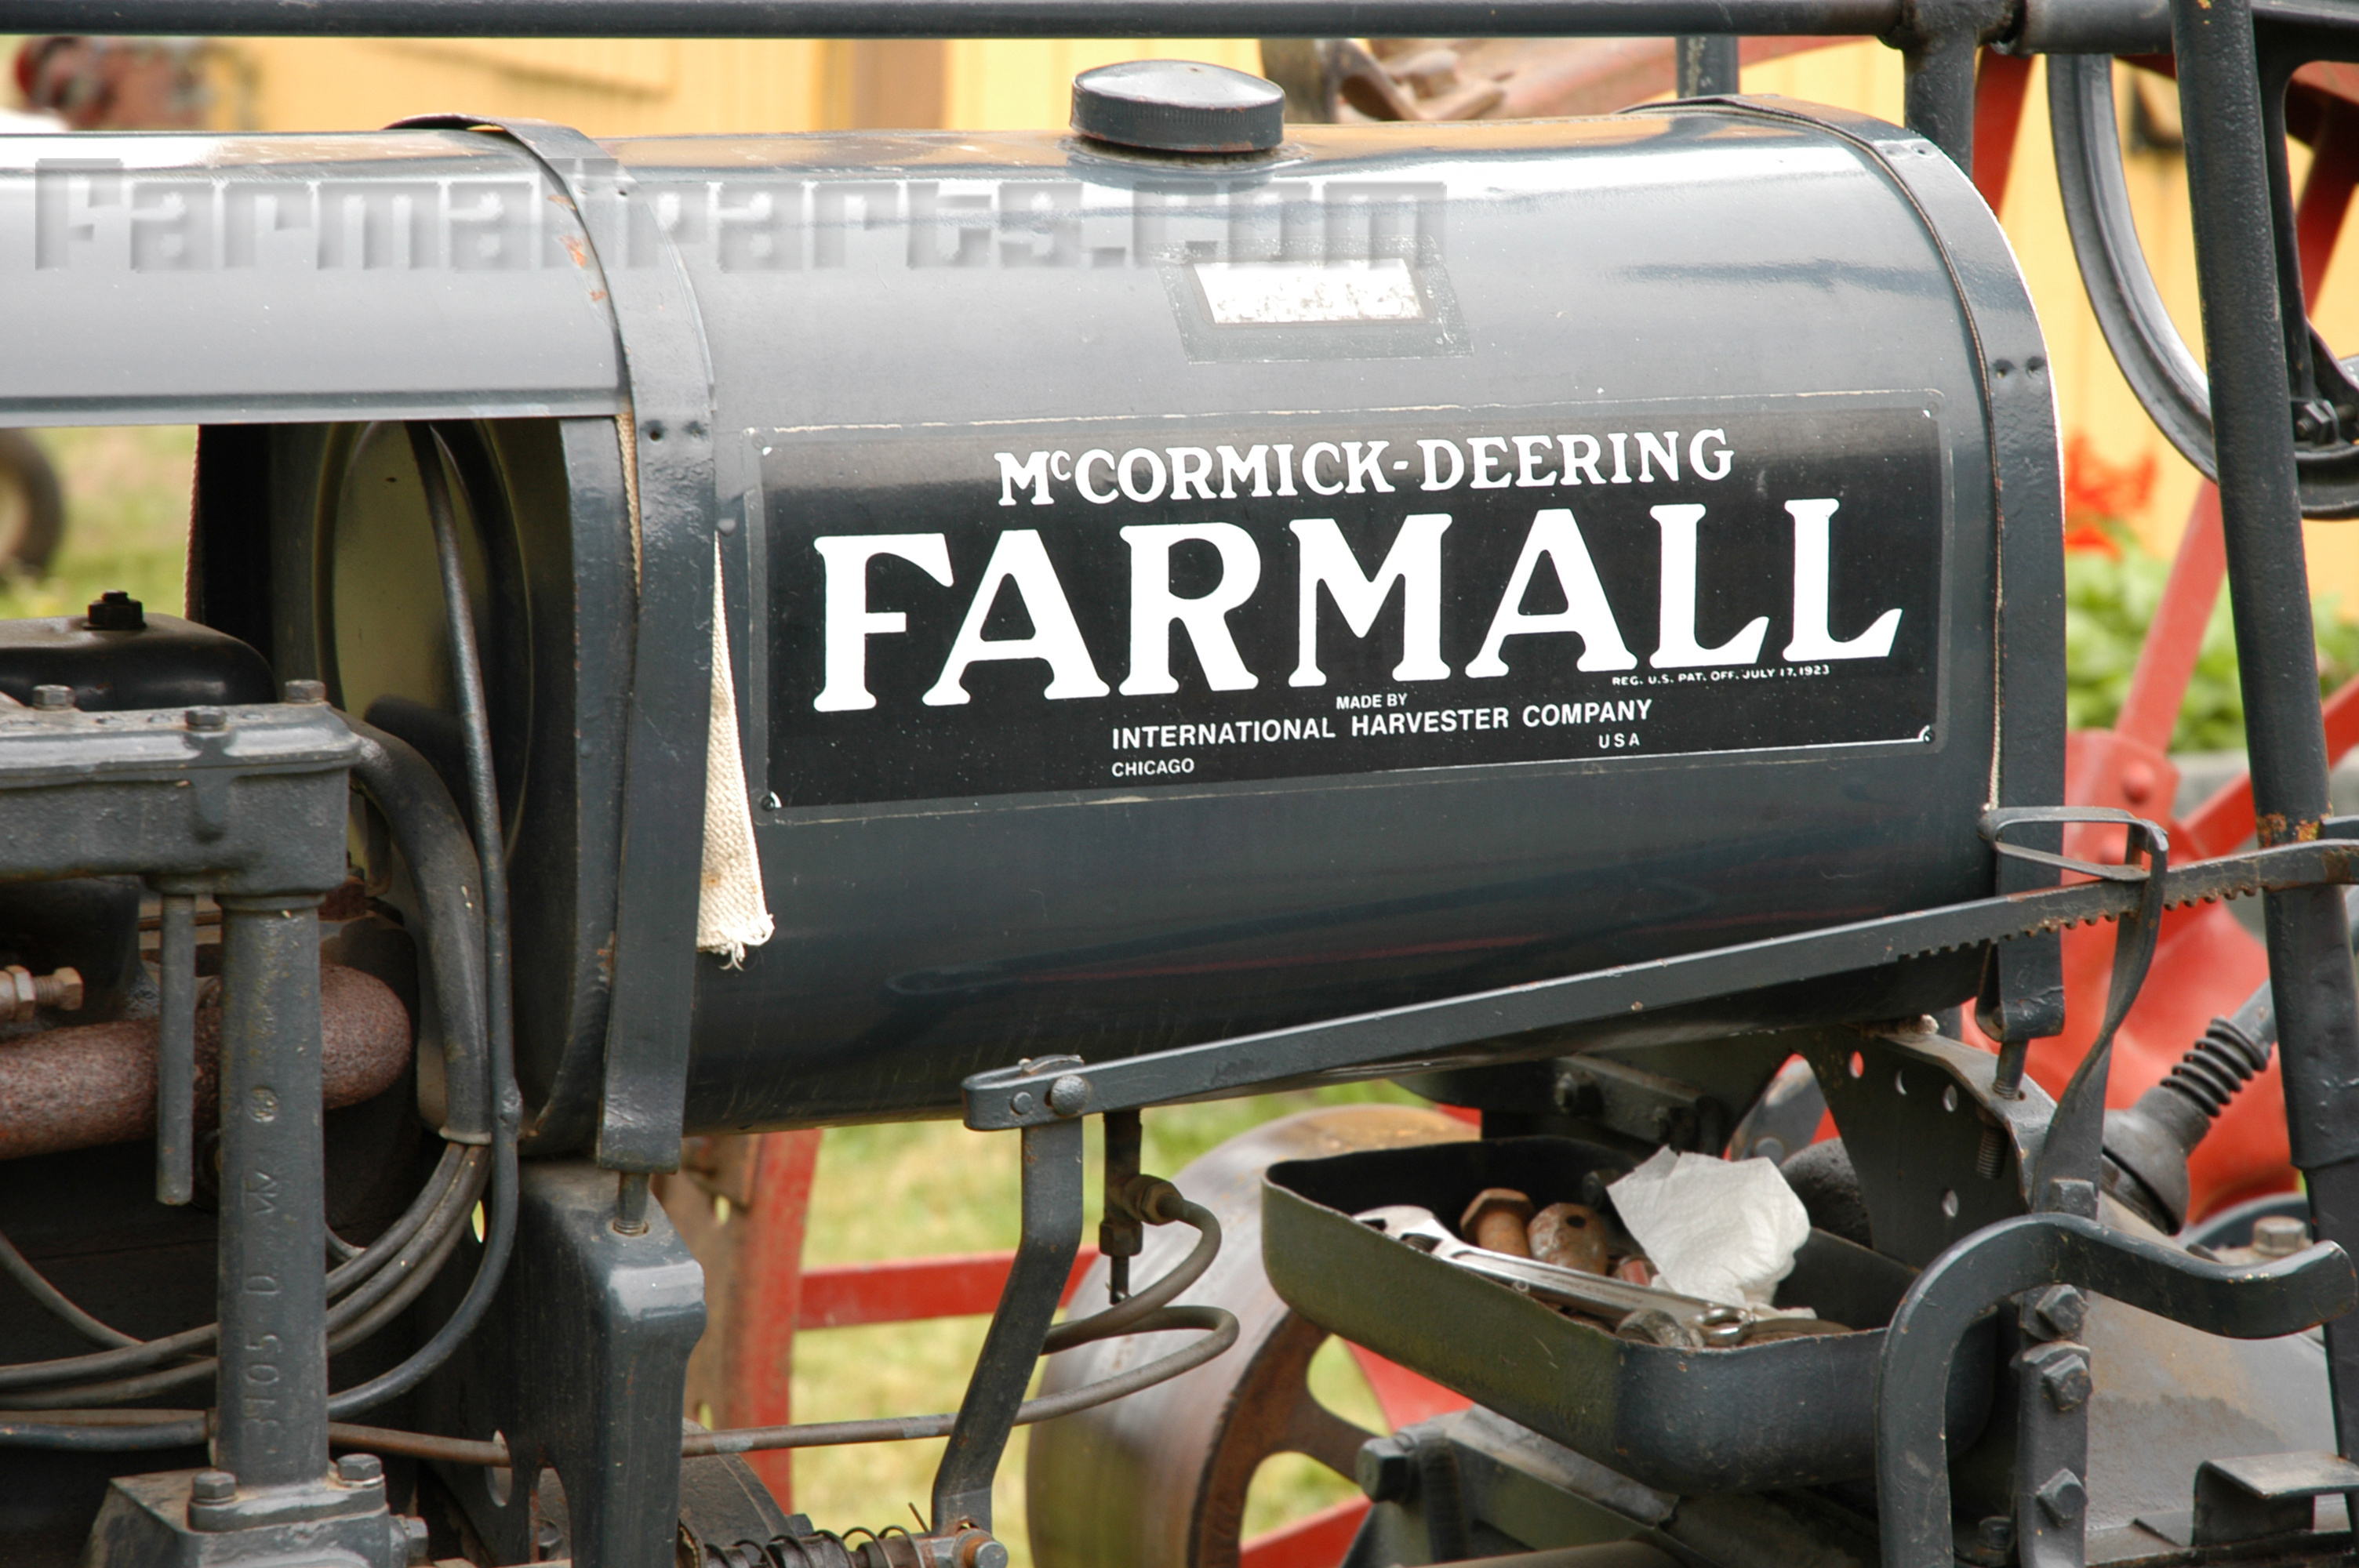 International Harvester Farmall McCormick-Deering Farmall Fuel Tank